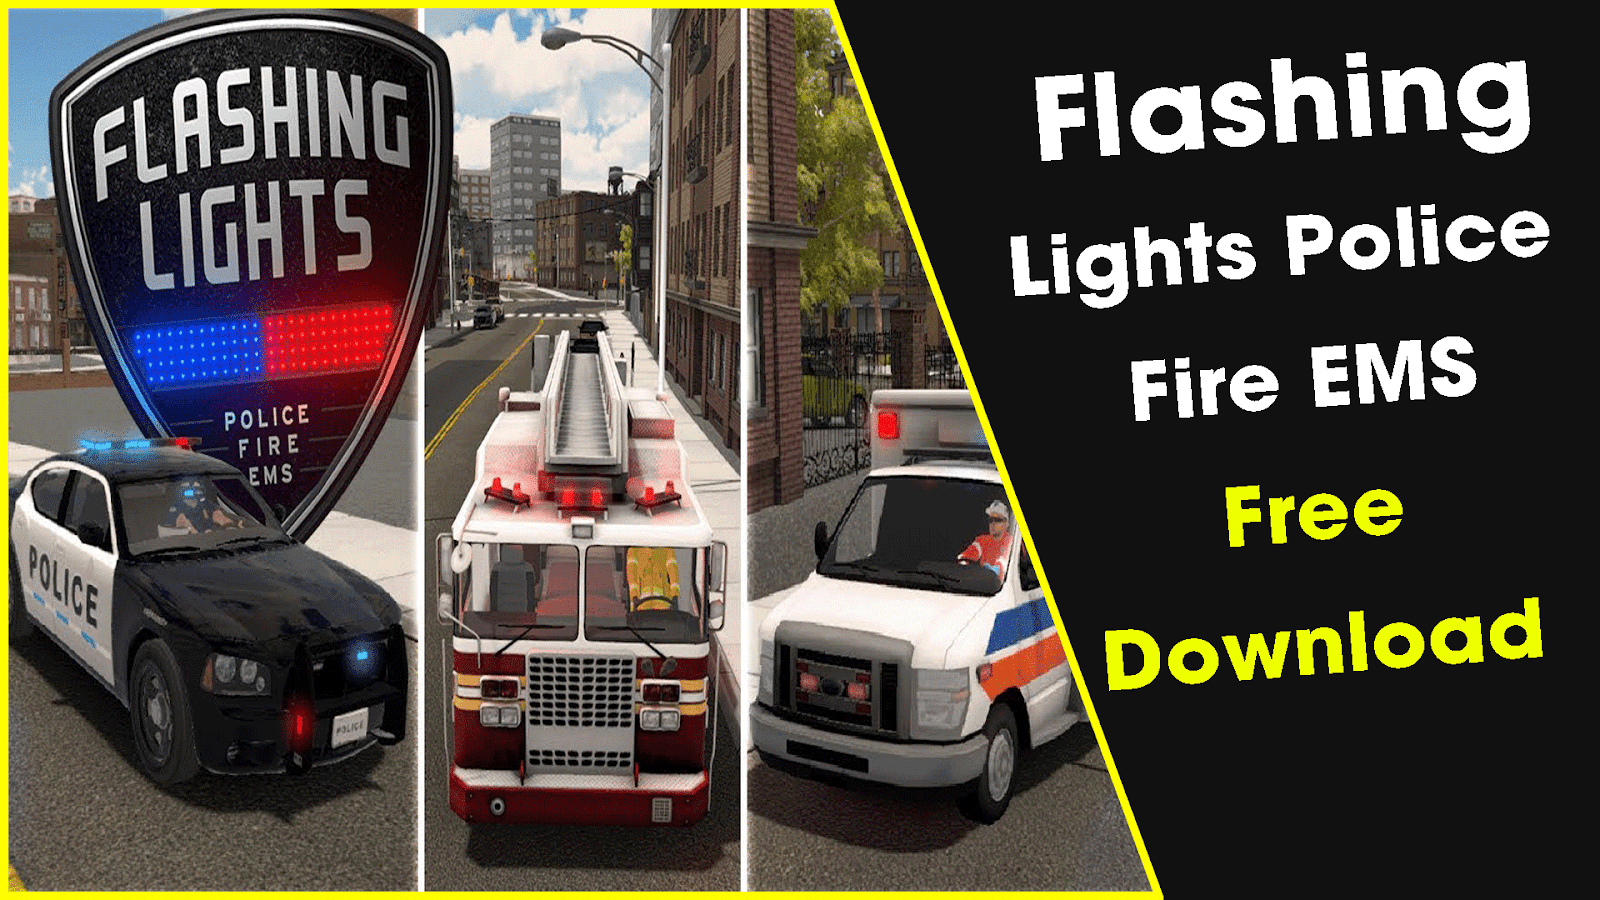 Ems flash. Flashing Lights - Police Fire. Police flashing Light. Police Fire ems. Flashing Light полиция пожарные.